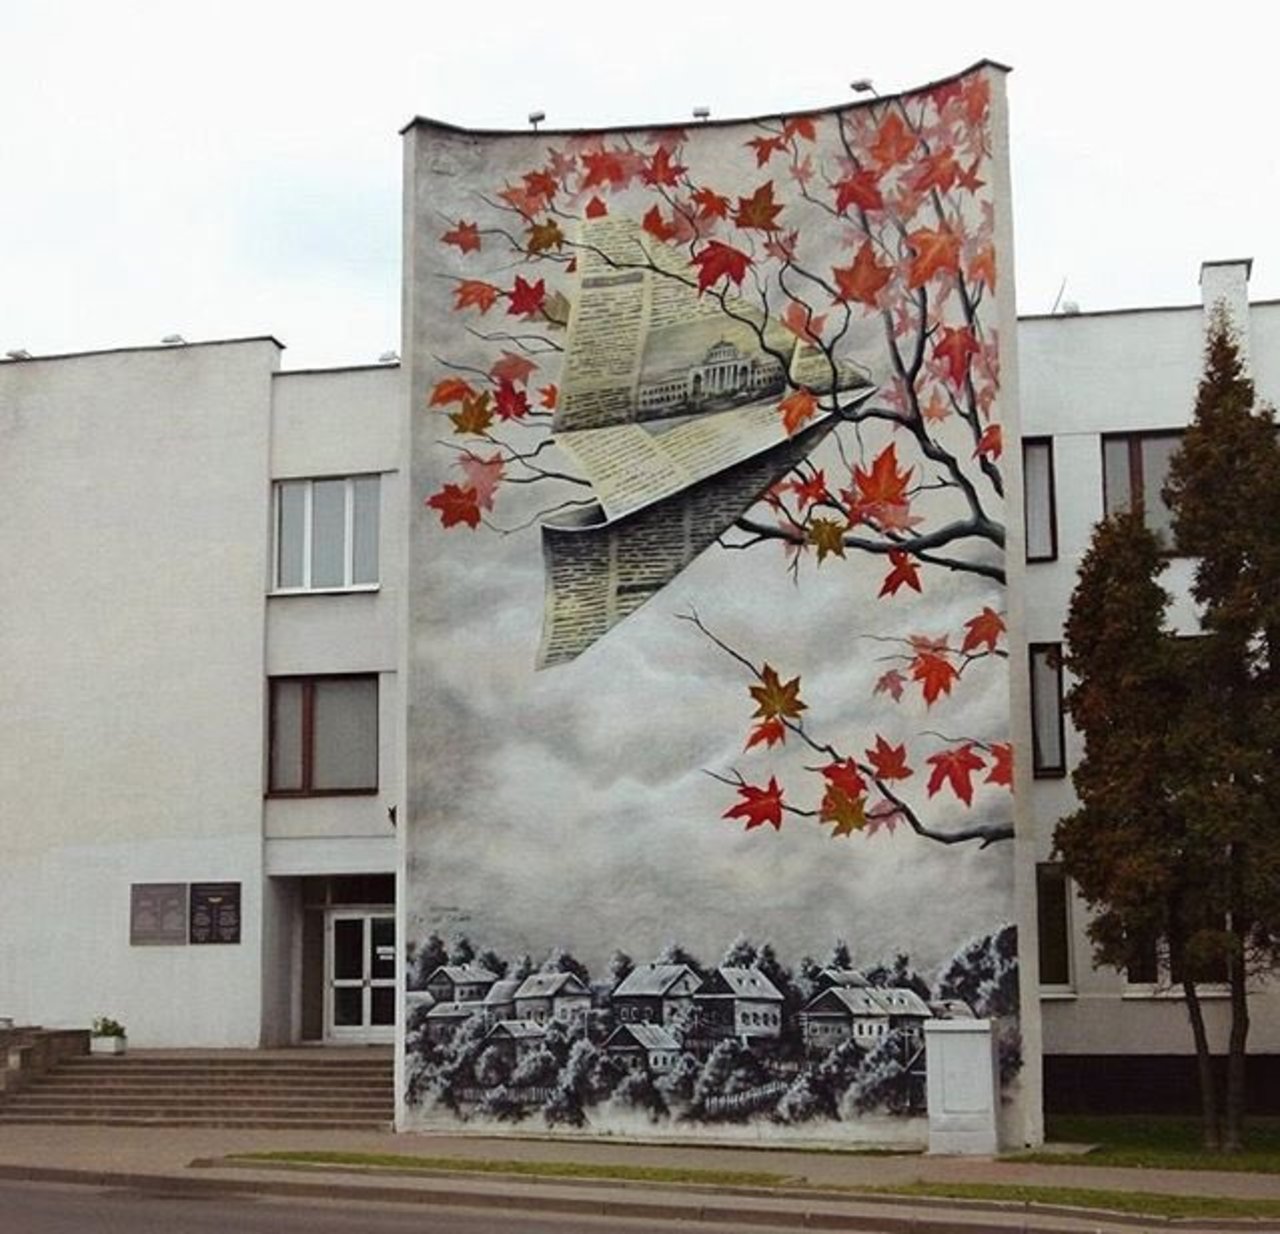 New Street Art by MUTUS in Belarus 

#art #graffiti #mural #streetart https://t.co/wNPde4EB5B